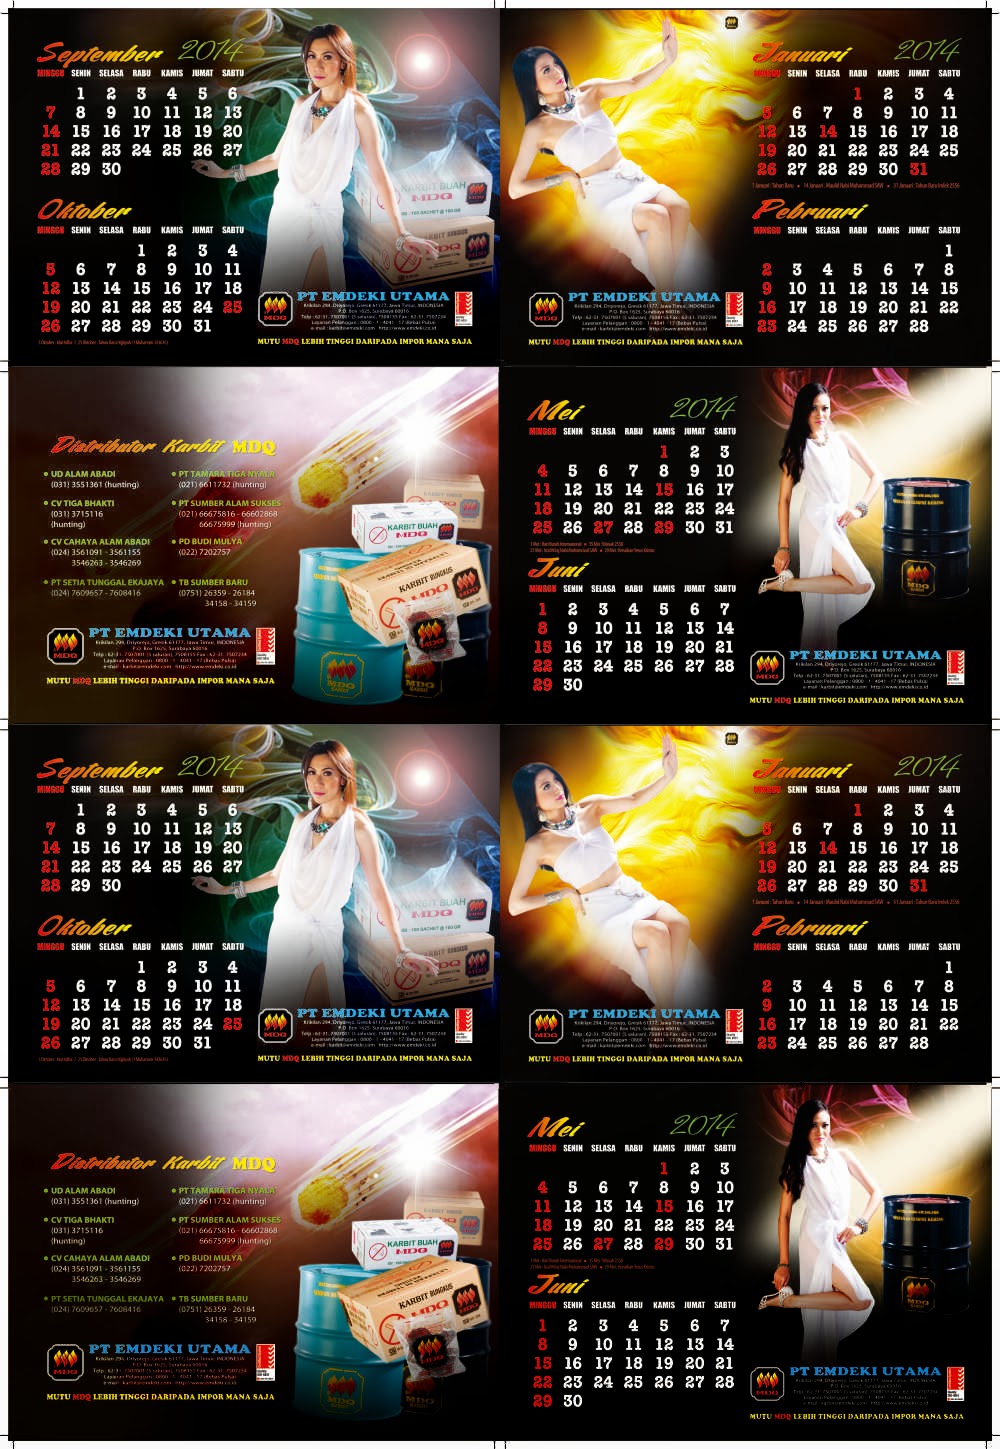 Desain Kalender Meja 2014 PT EMDEKI UTAMA - Desain Jempol (y)